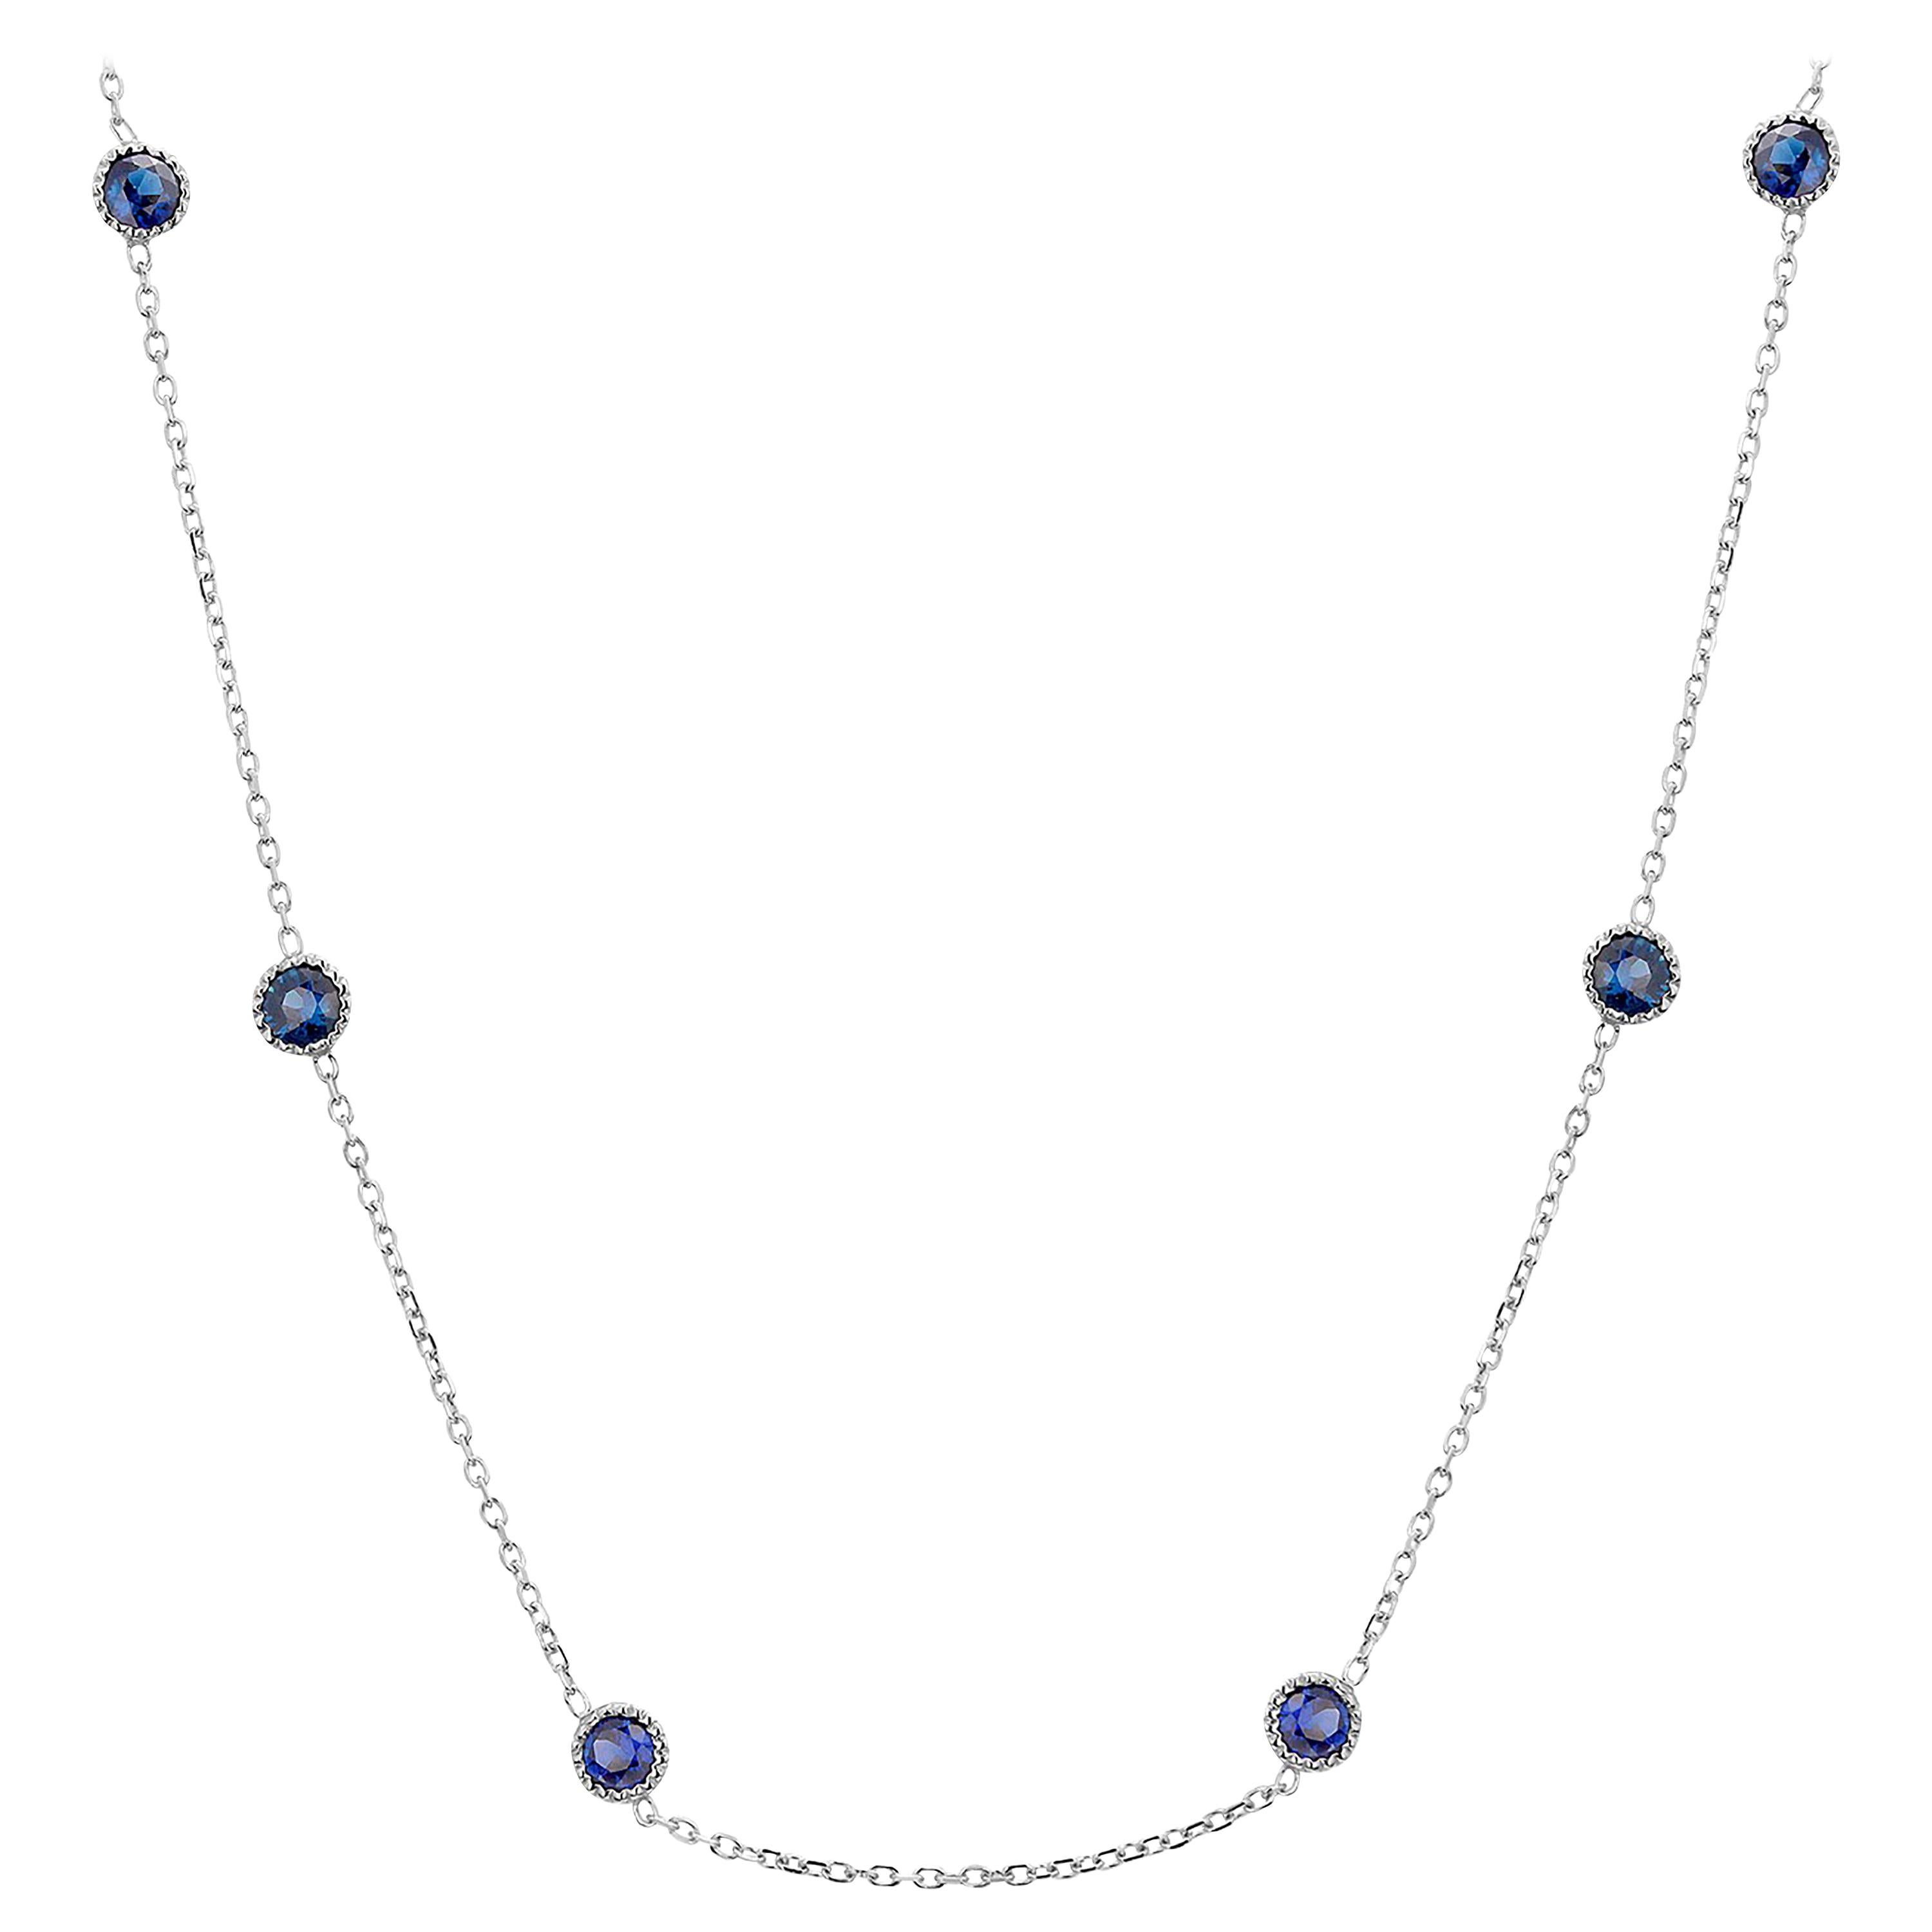 Six Bezel-Set Round Sapphire White Gold Necklace Weighing 1.05 Carat